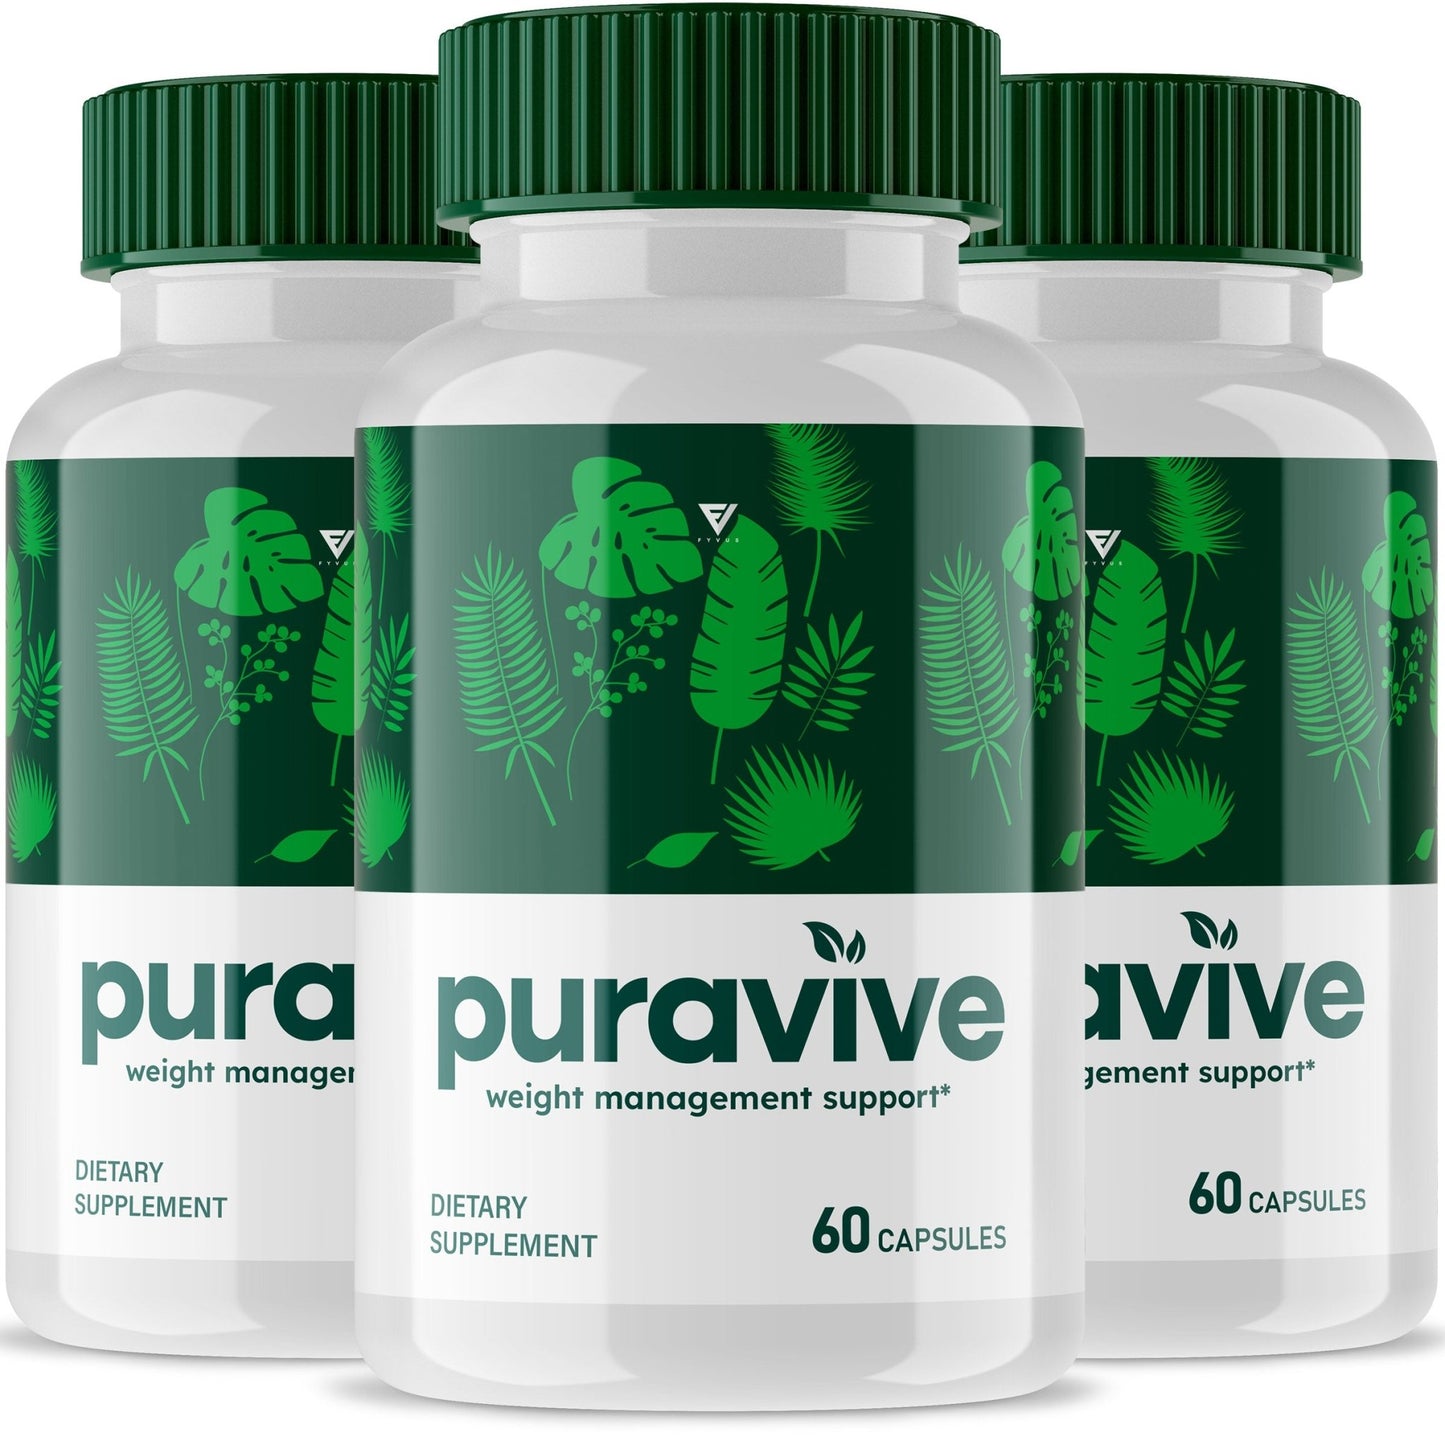 Puravive - Vitamin Place